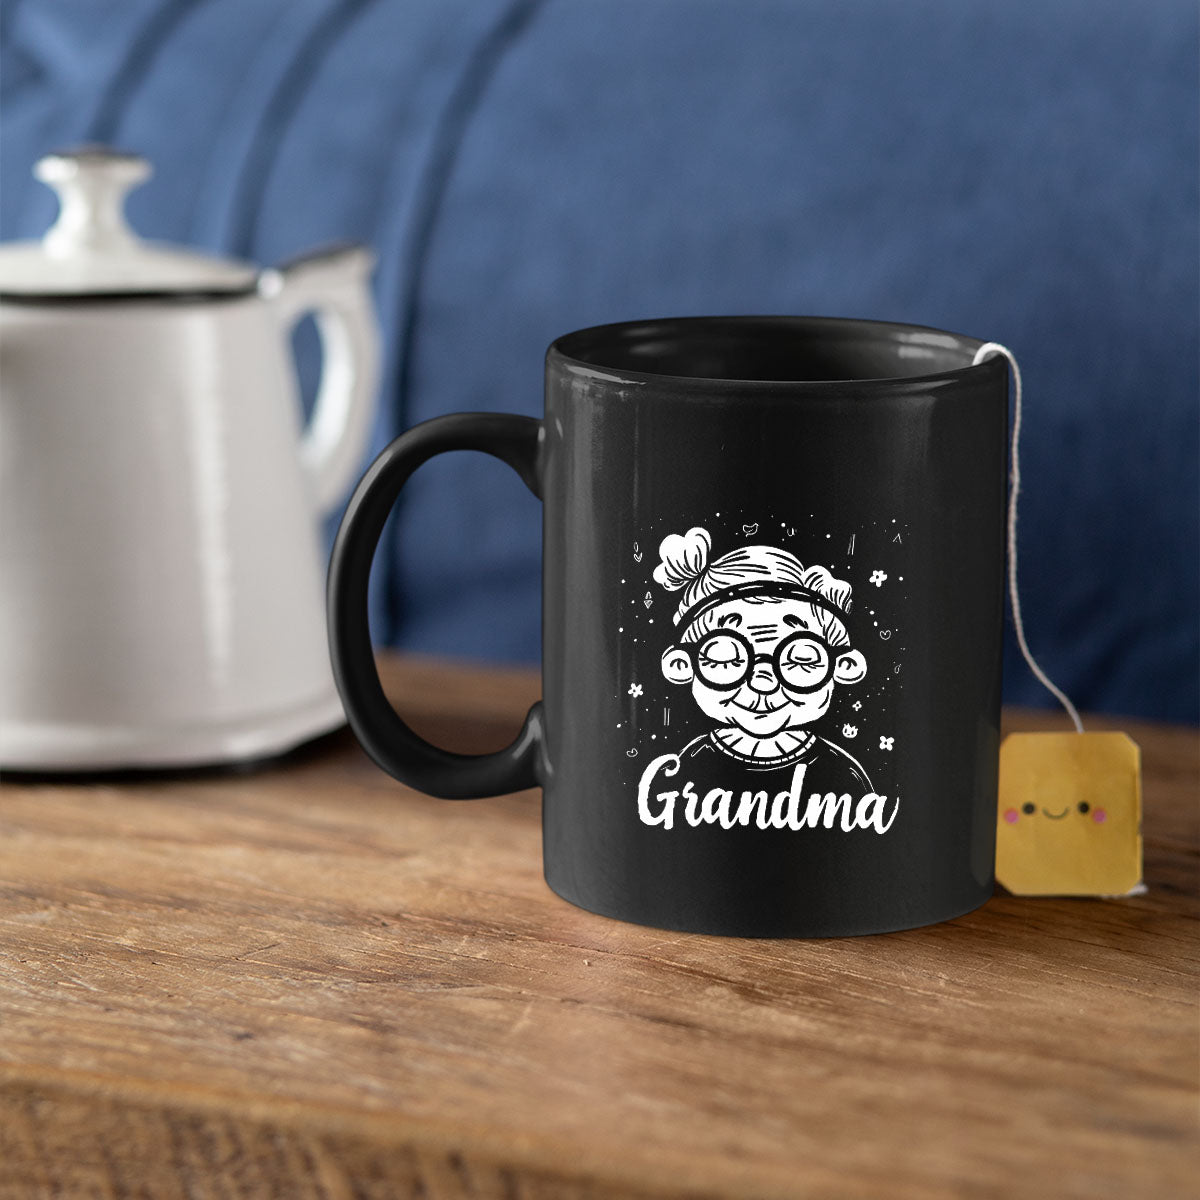 Grandma Mug, Grandma Gift For Grandma Birthday Gift Personalized Grandma Coffee Cup, Mothers Day Gift From Granddaughter Grandson, Grandma 3